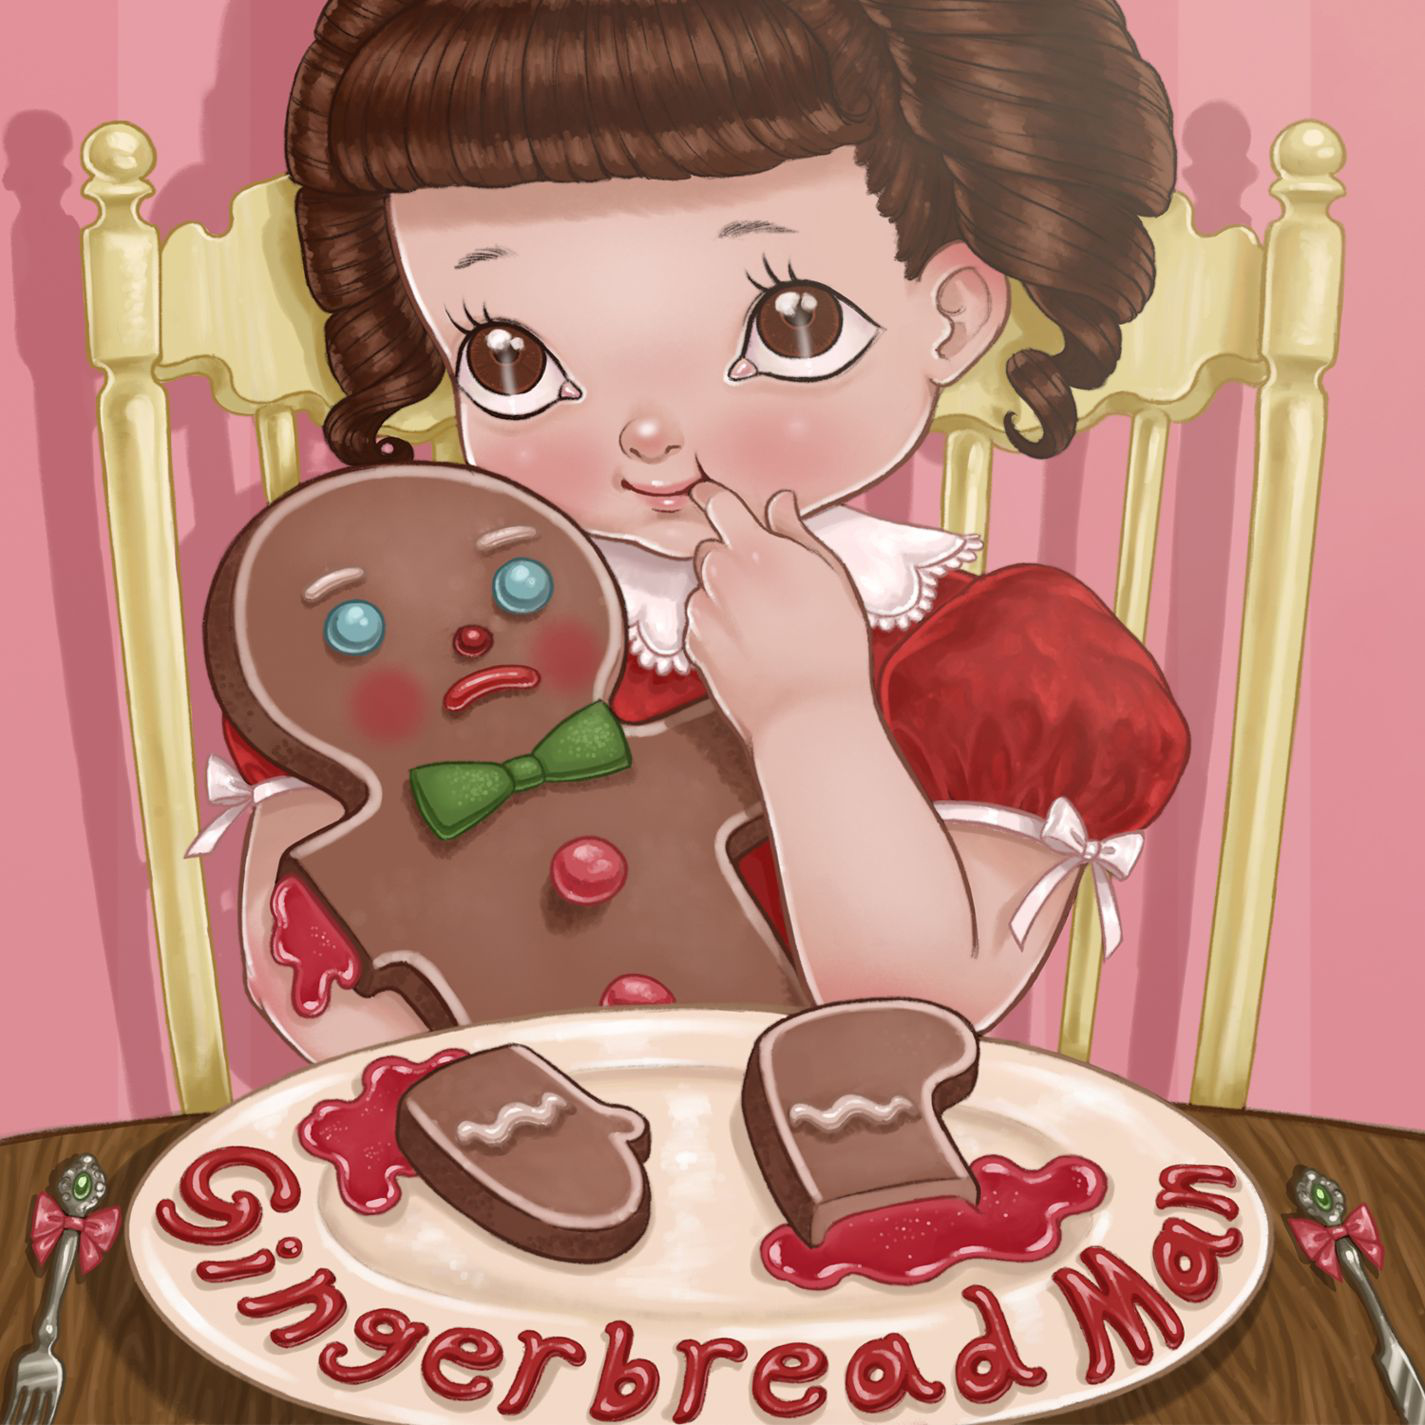 Gingerbread Man Melanie Martinez Wiki Fandom - roblox id songs pity party